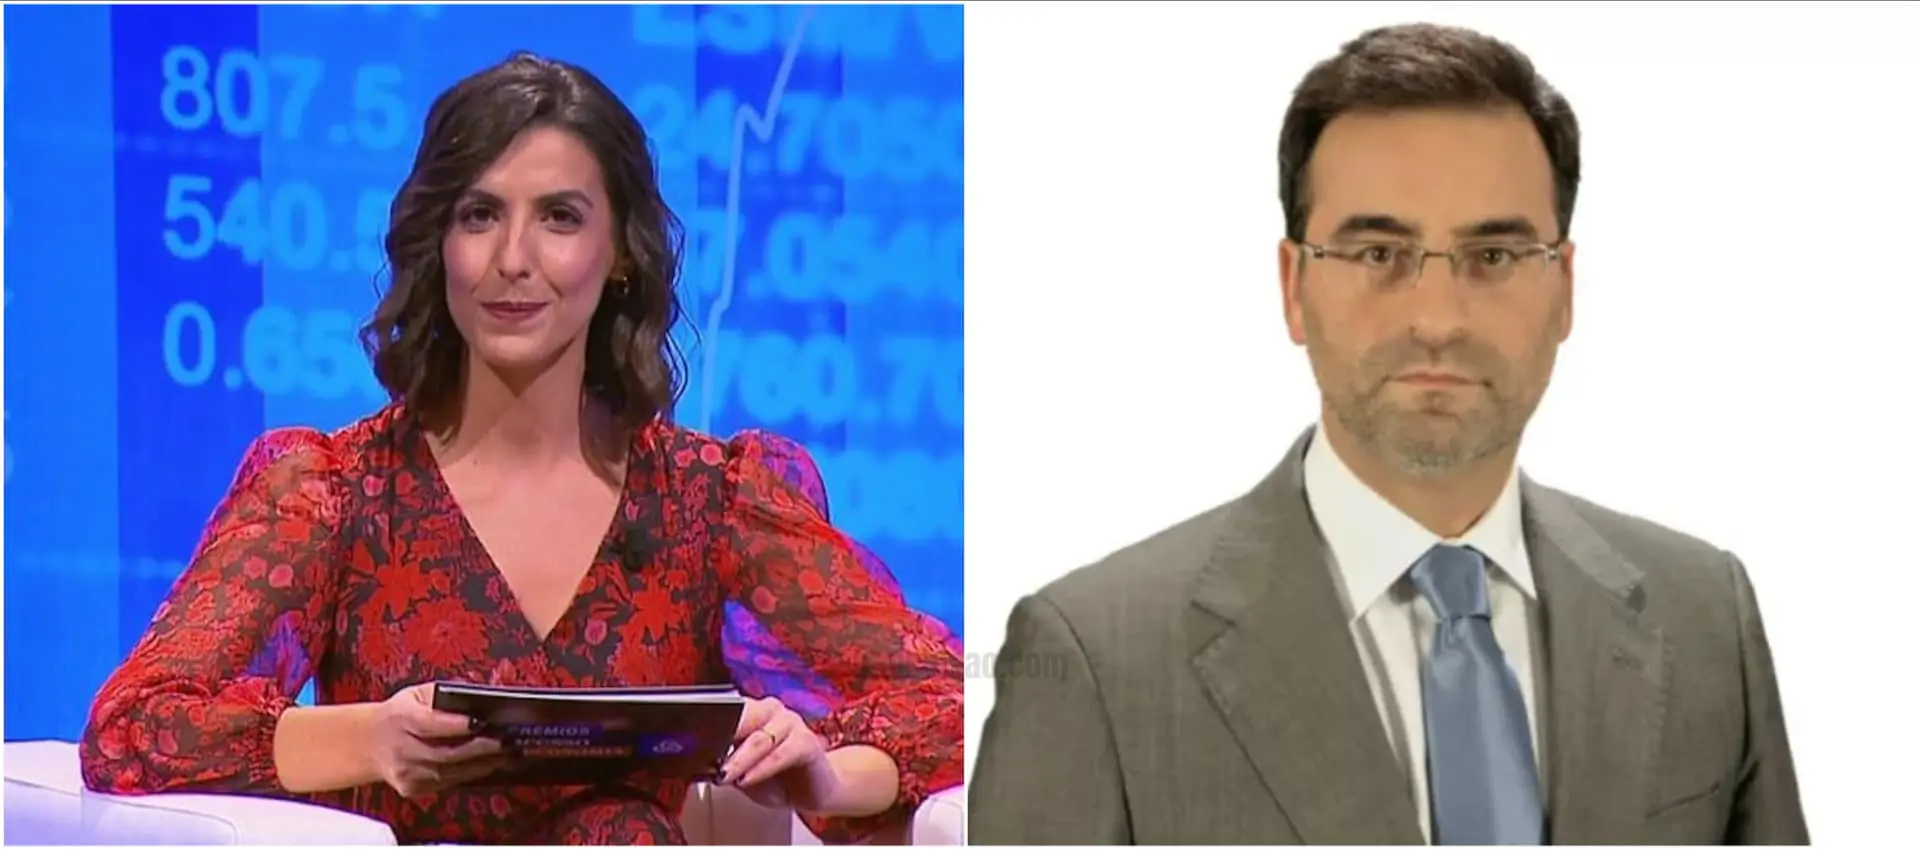 Sara-Pinto-Joaquim-Franco-Jornalistas-Sic-Tvi